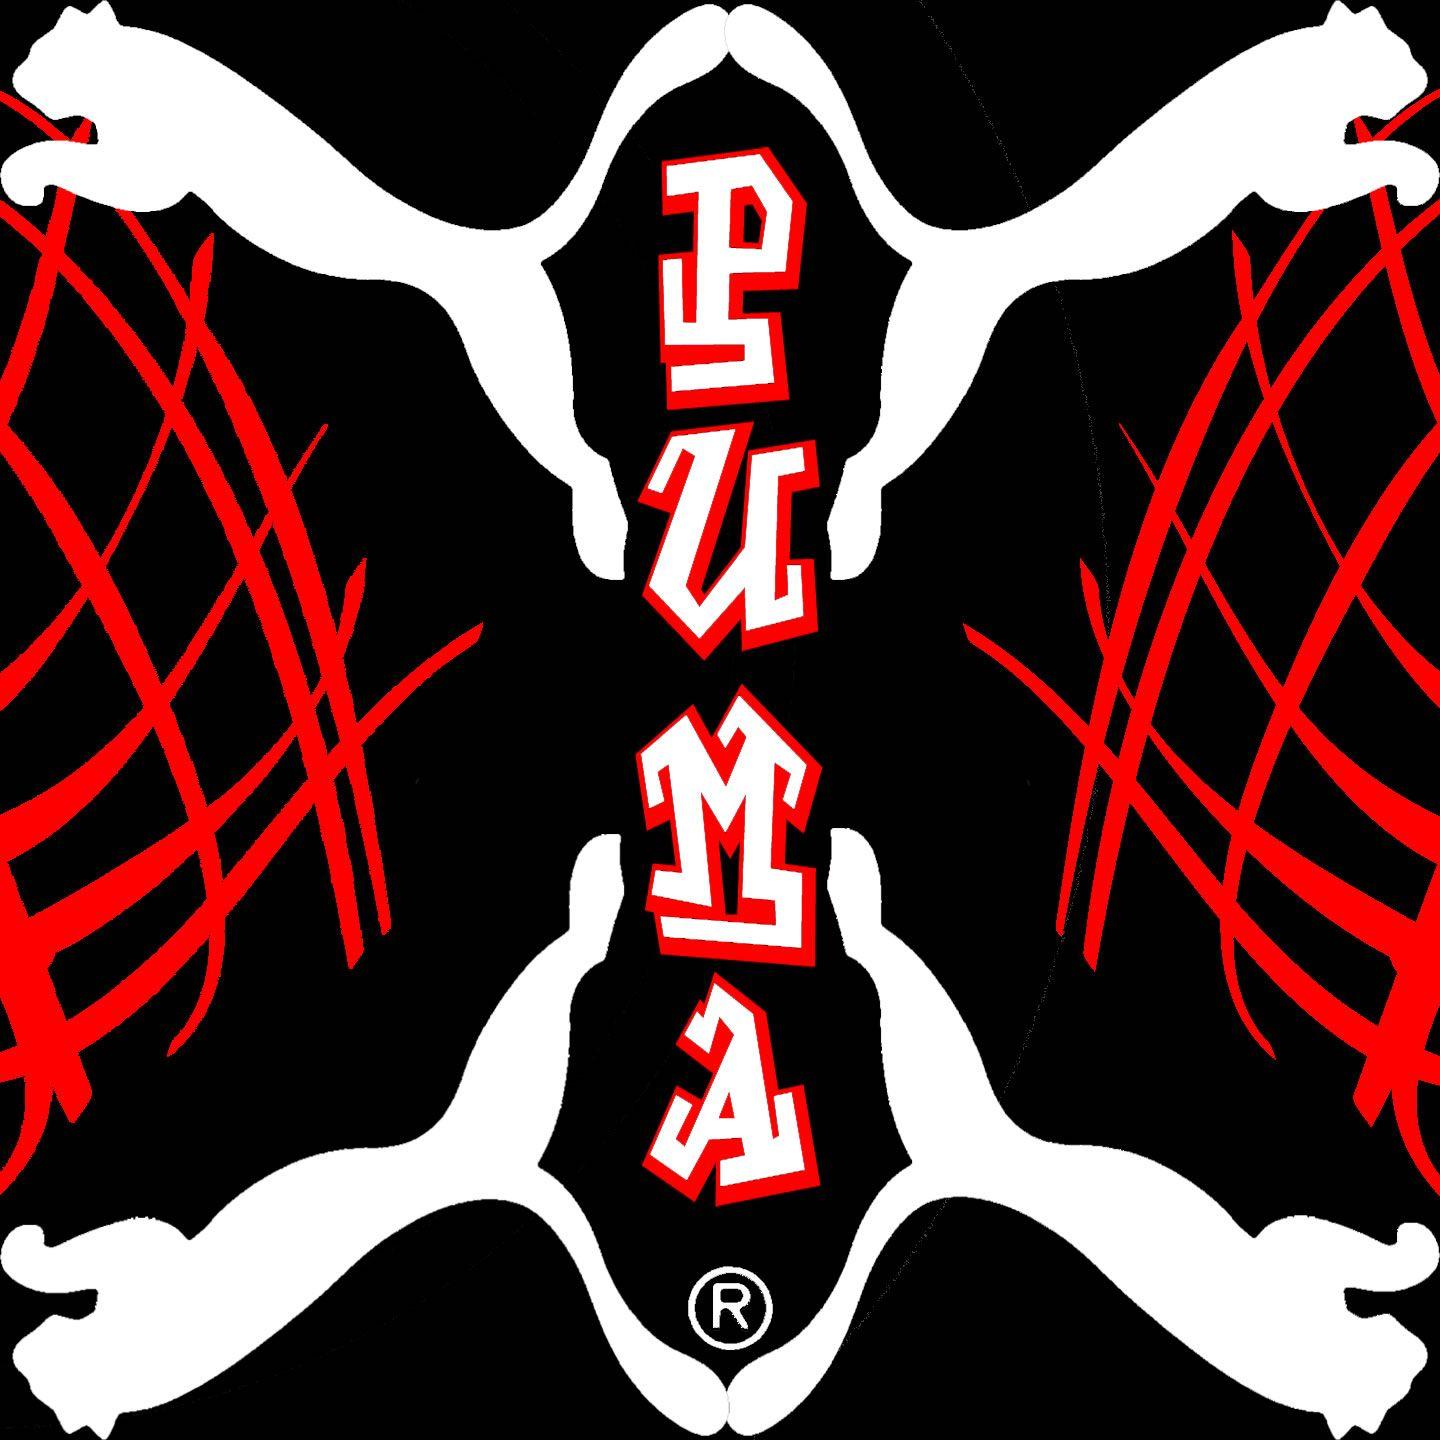 Cool Puma Logo - Puma logo designs. Shabizzle's Blog